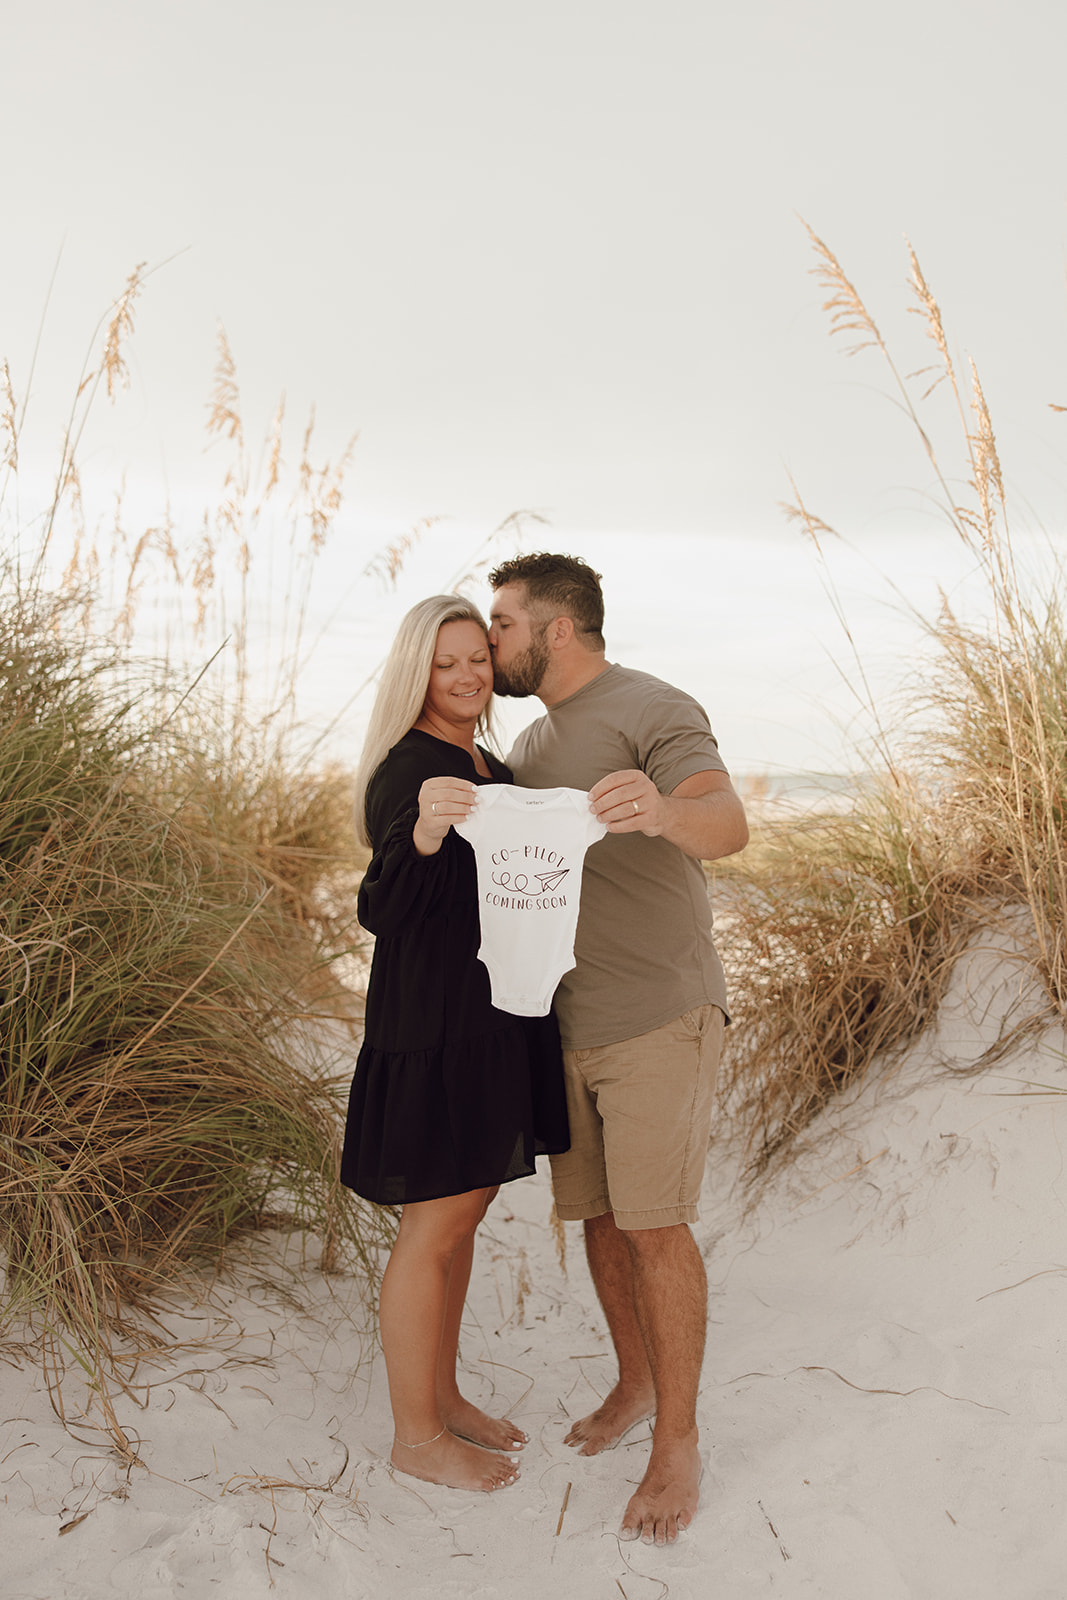 the couple holding a baby onesie as an idea for beach photoshoot